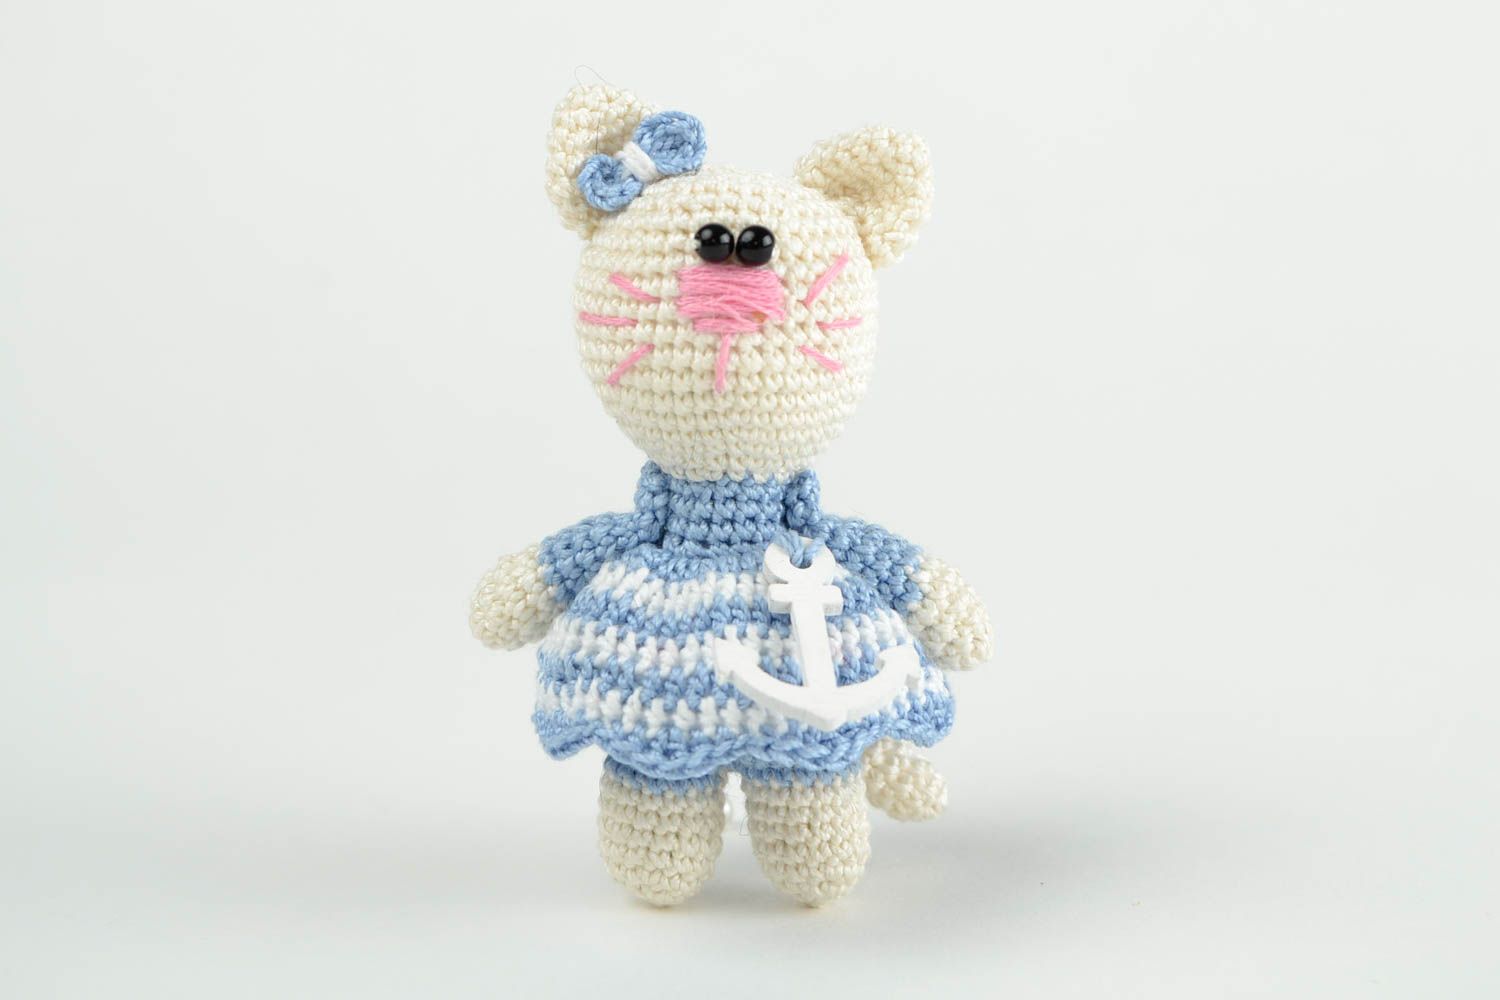 Handmade designer crocheted toy unusual cute soft toy stylish accessory photo 3